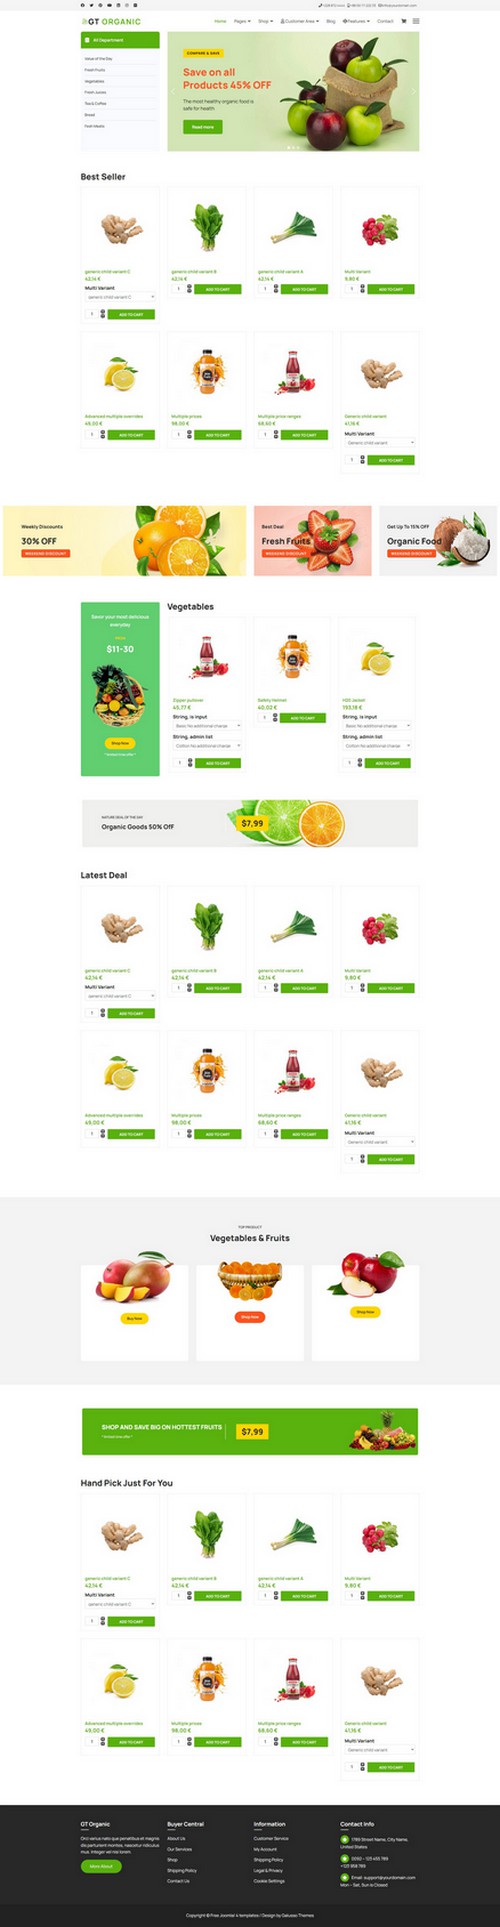 GT Organic - Mobile-friendly Organic Food Shop Joomla 4 Template